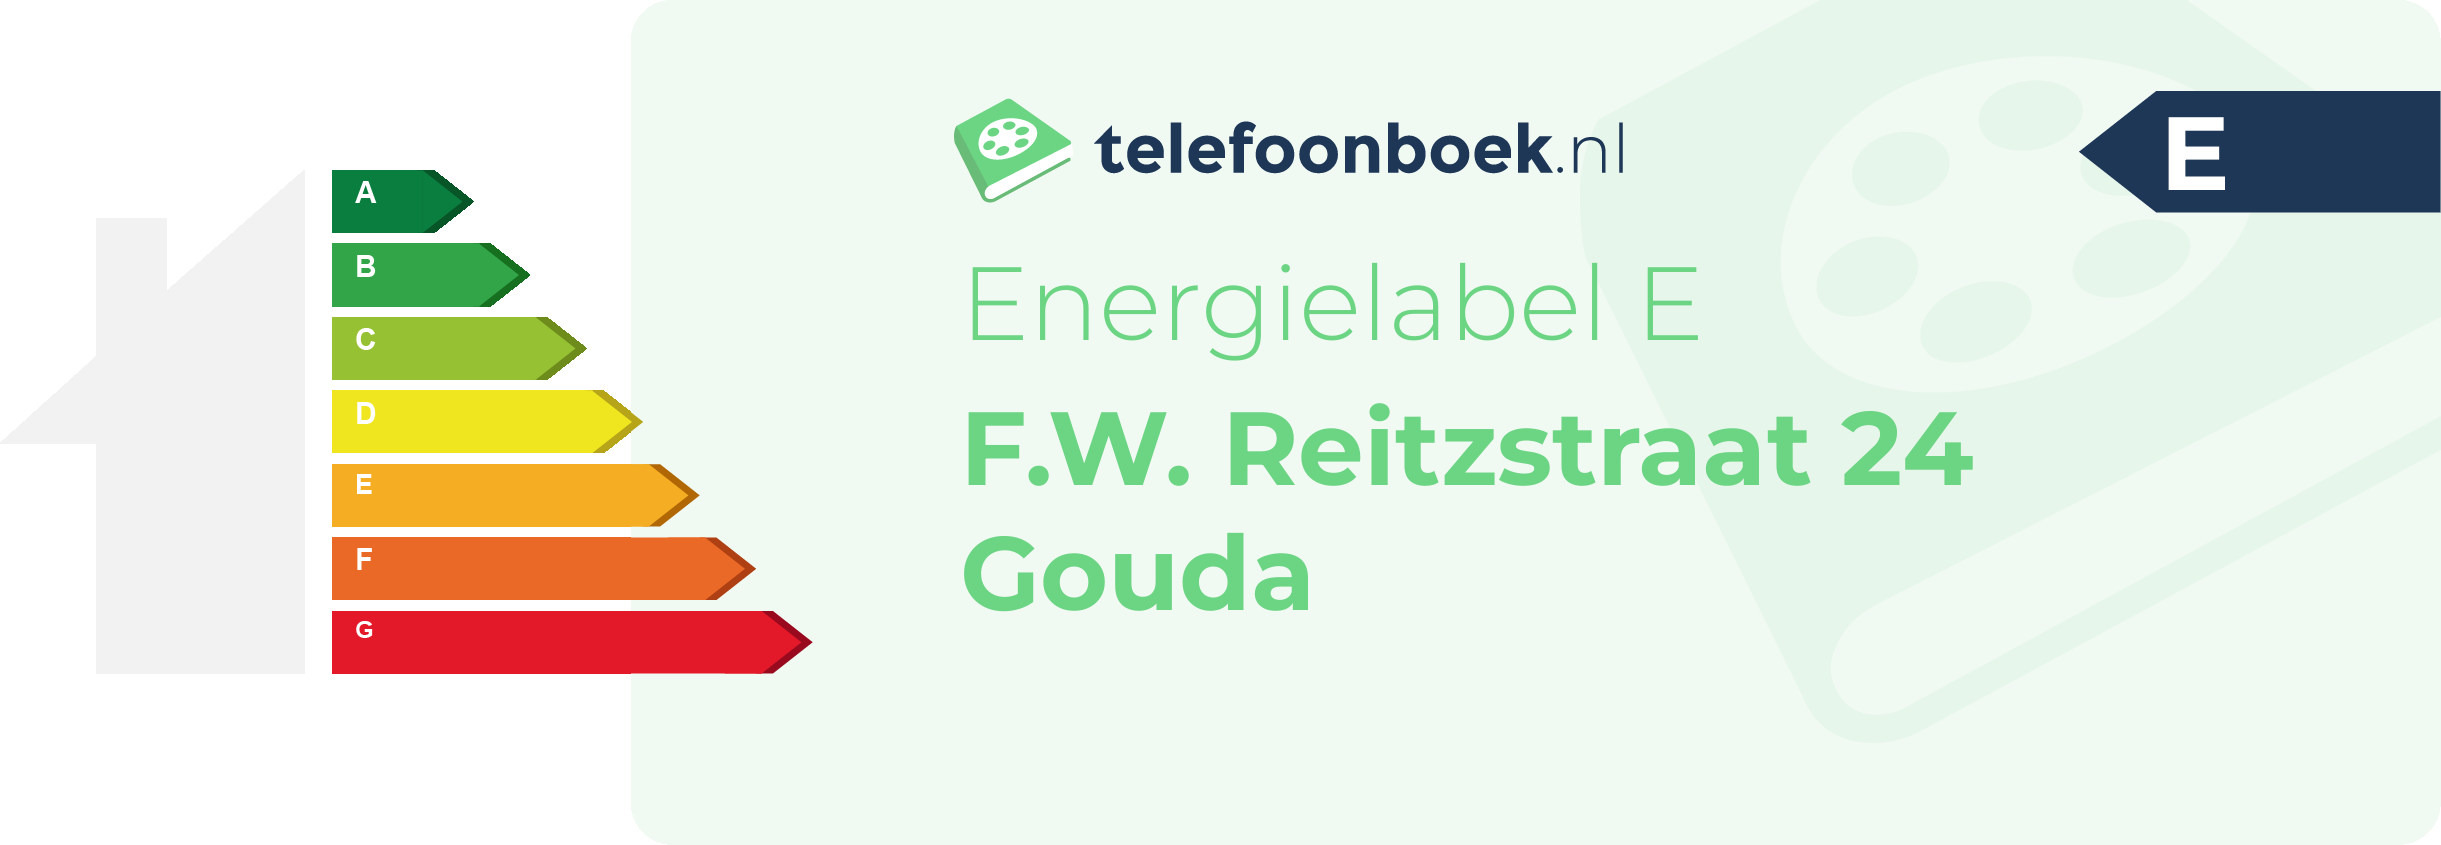 Energielabel F.W. Reitzstraat 24 Gouda